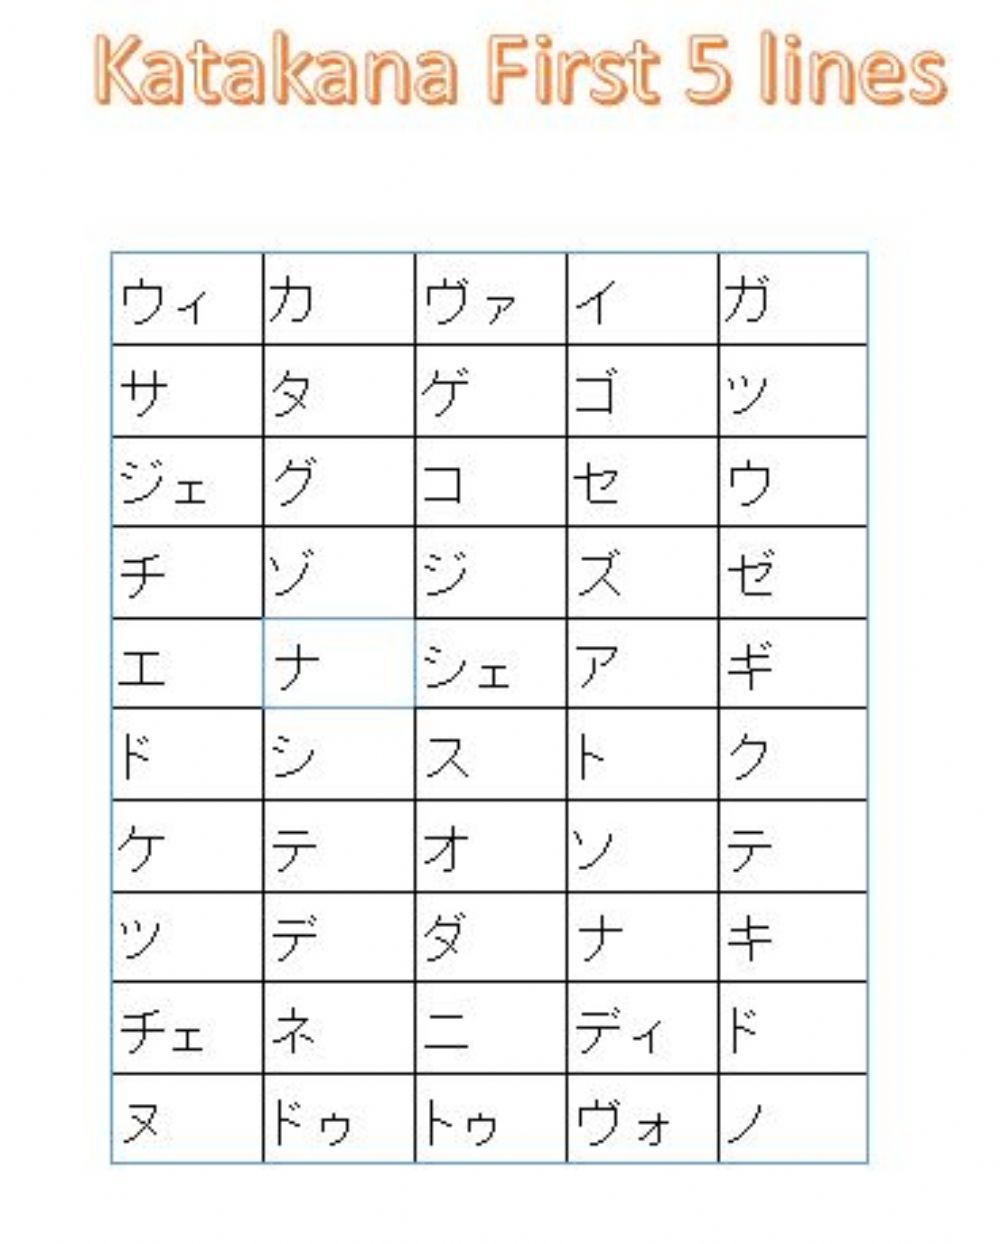 Katakana First 5 lines